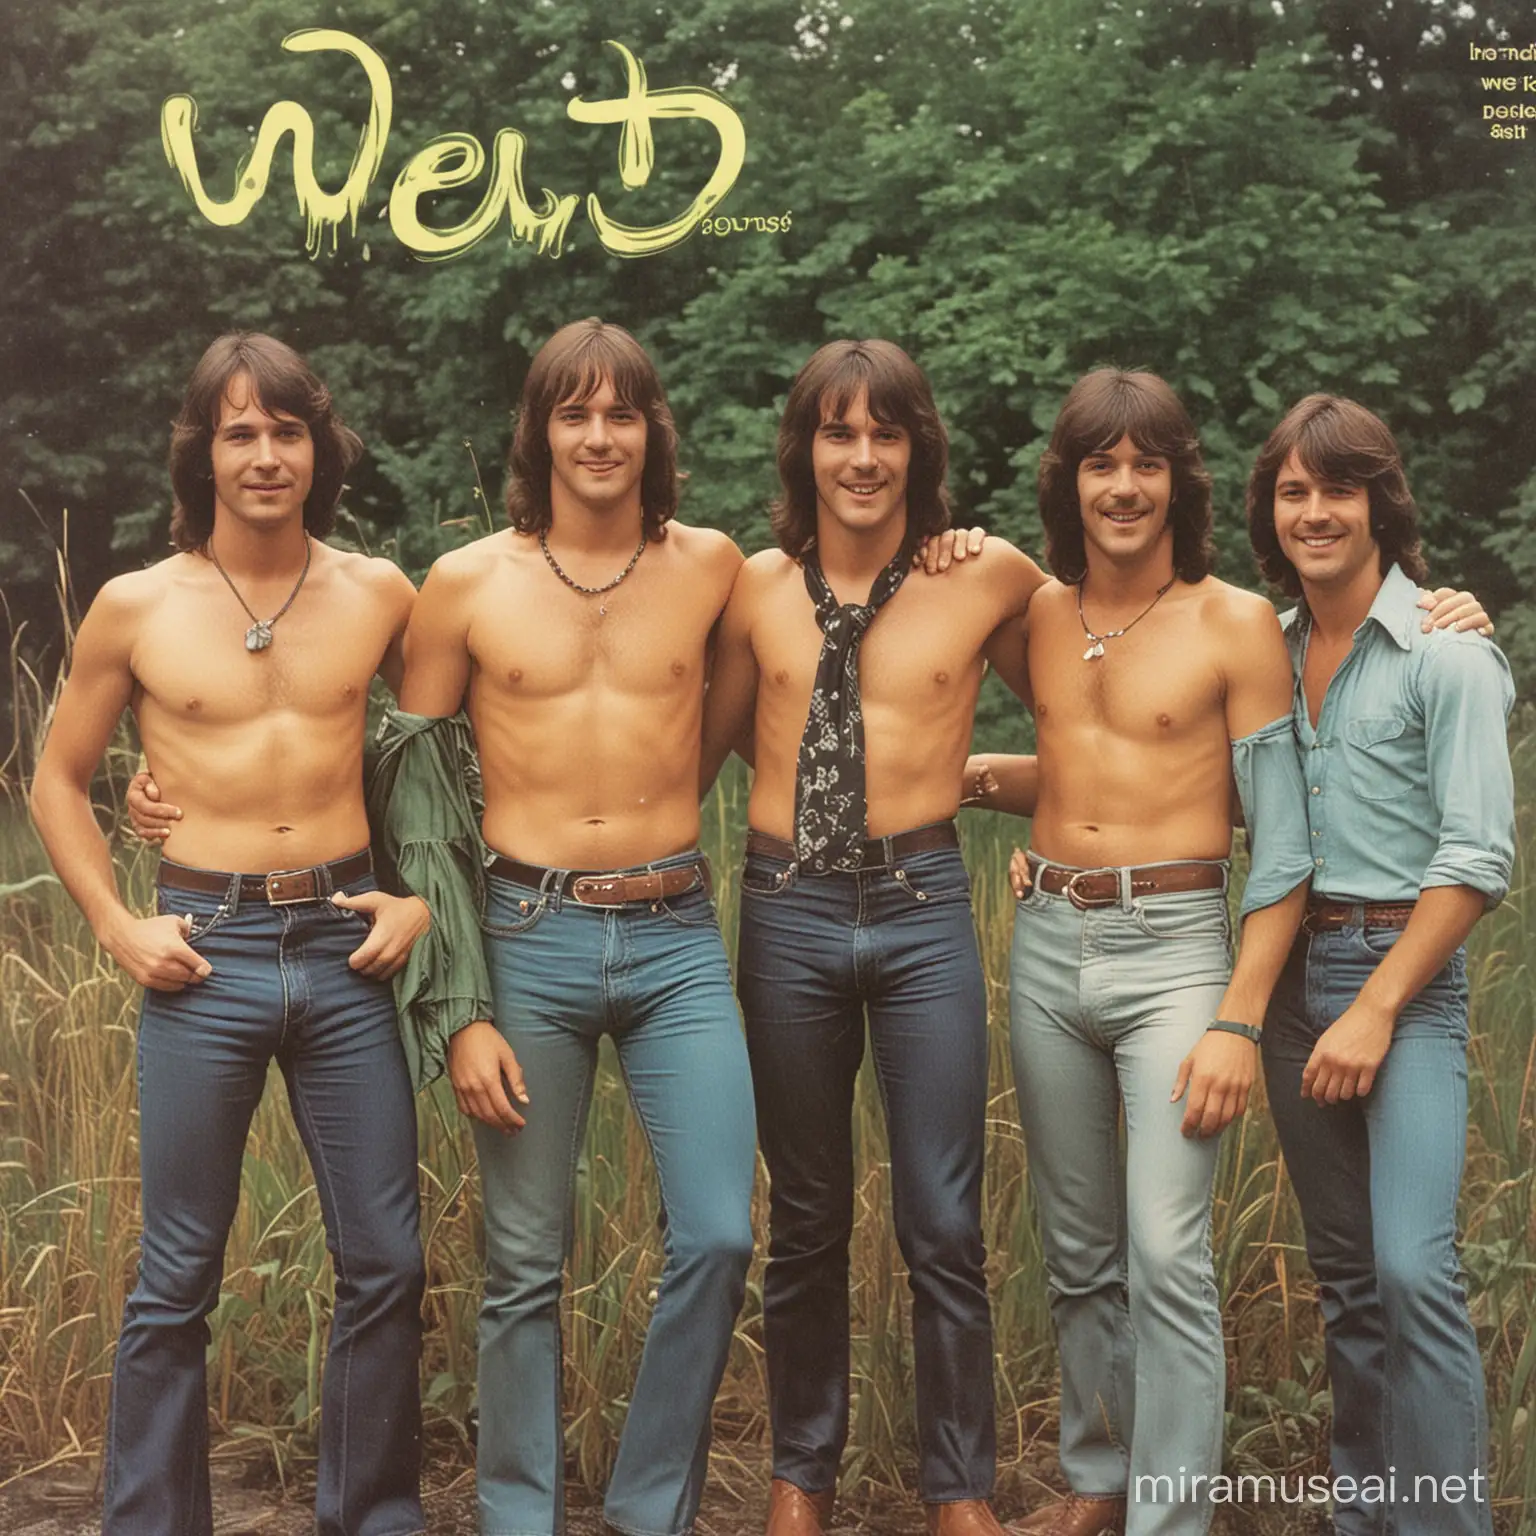 Vintage Album Cover Art Retro Band WET Featuring Four Members